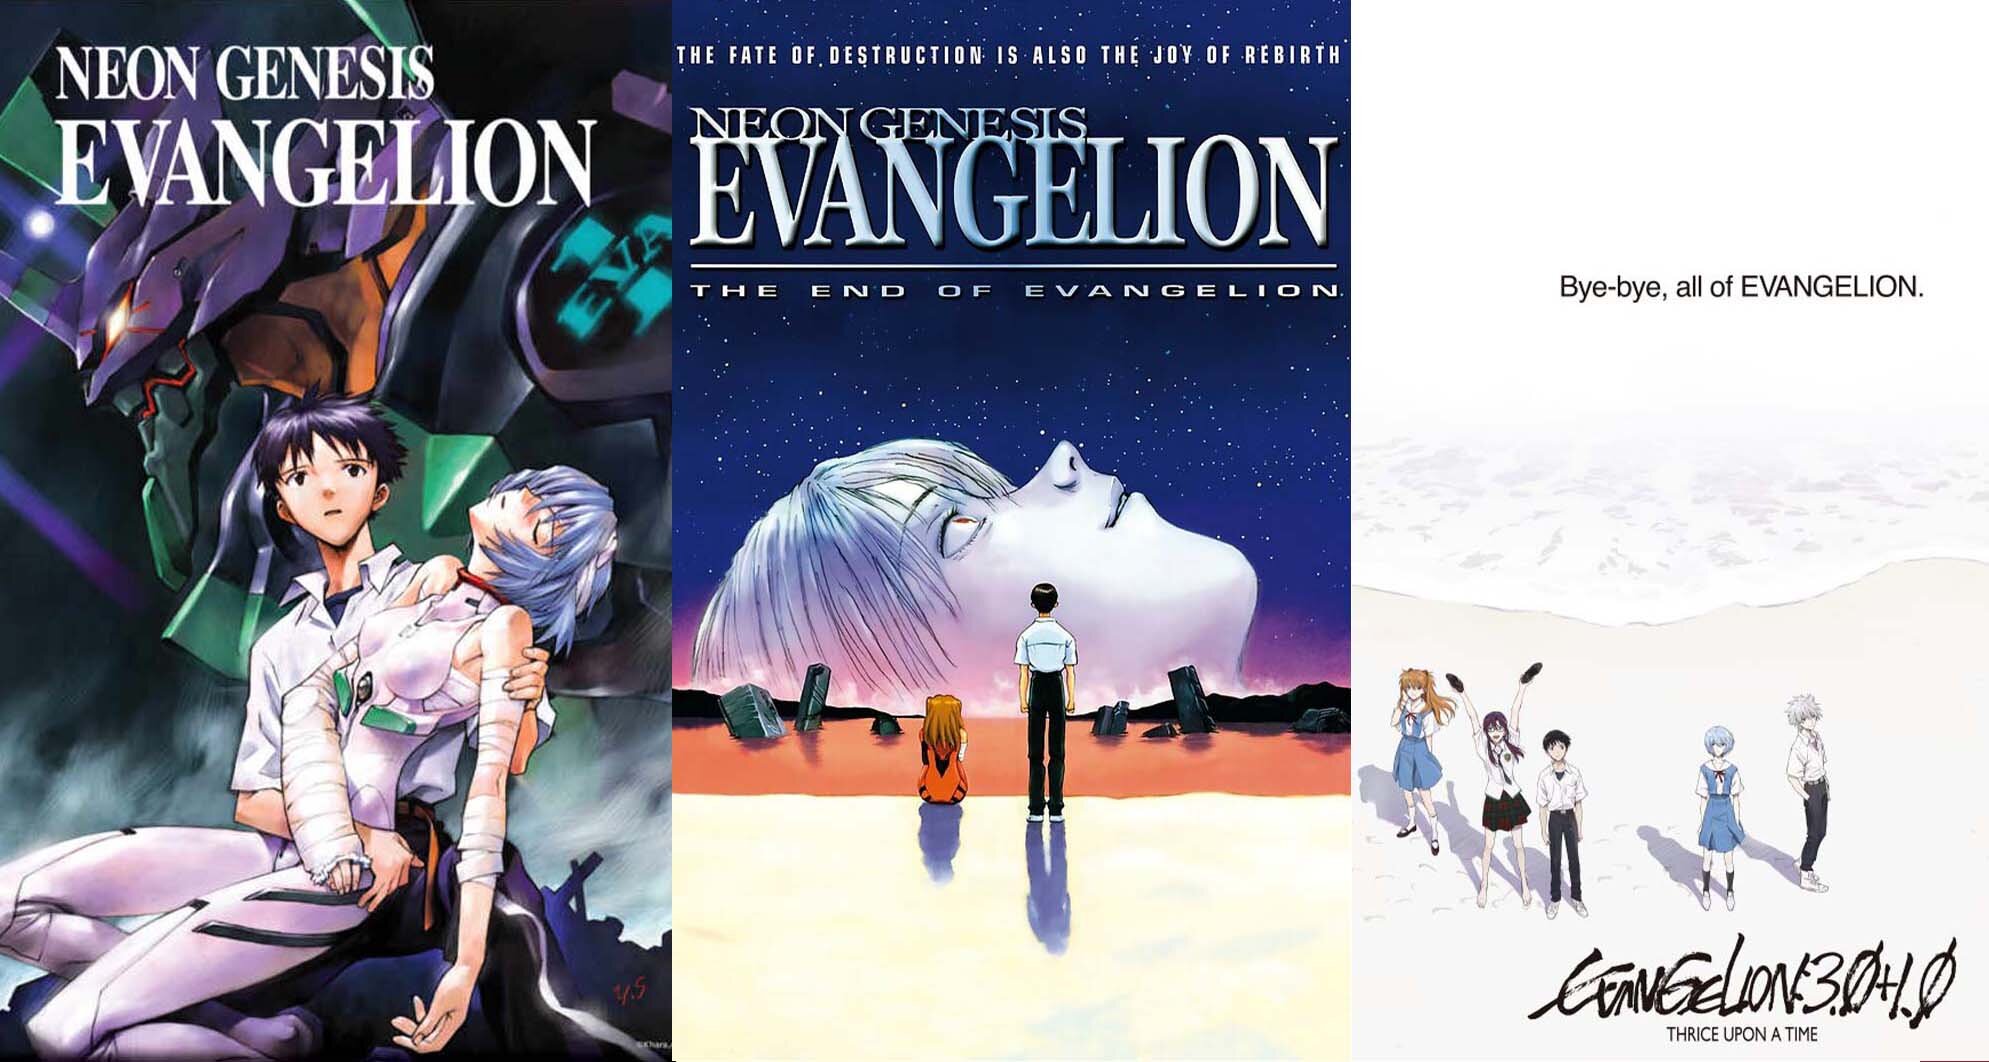 Neon Genesis Evangelion' on Netflix: What are 'End of Evangelion' and 'Death  (True)2'?